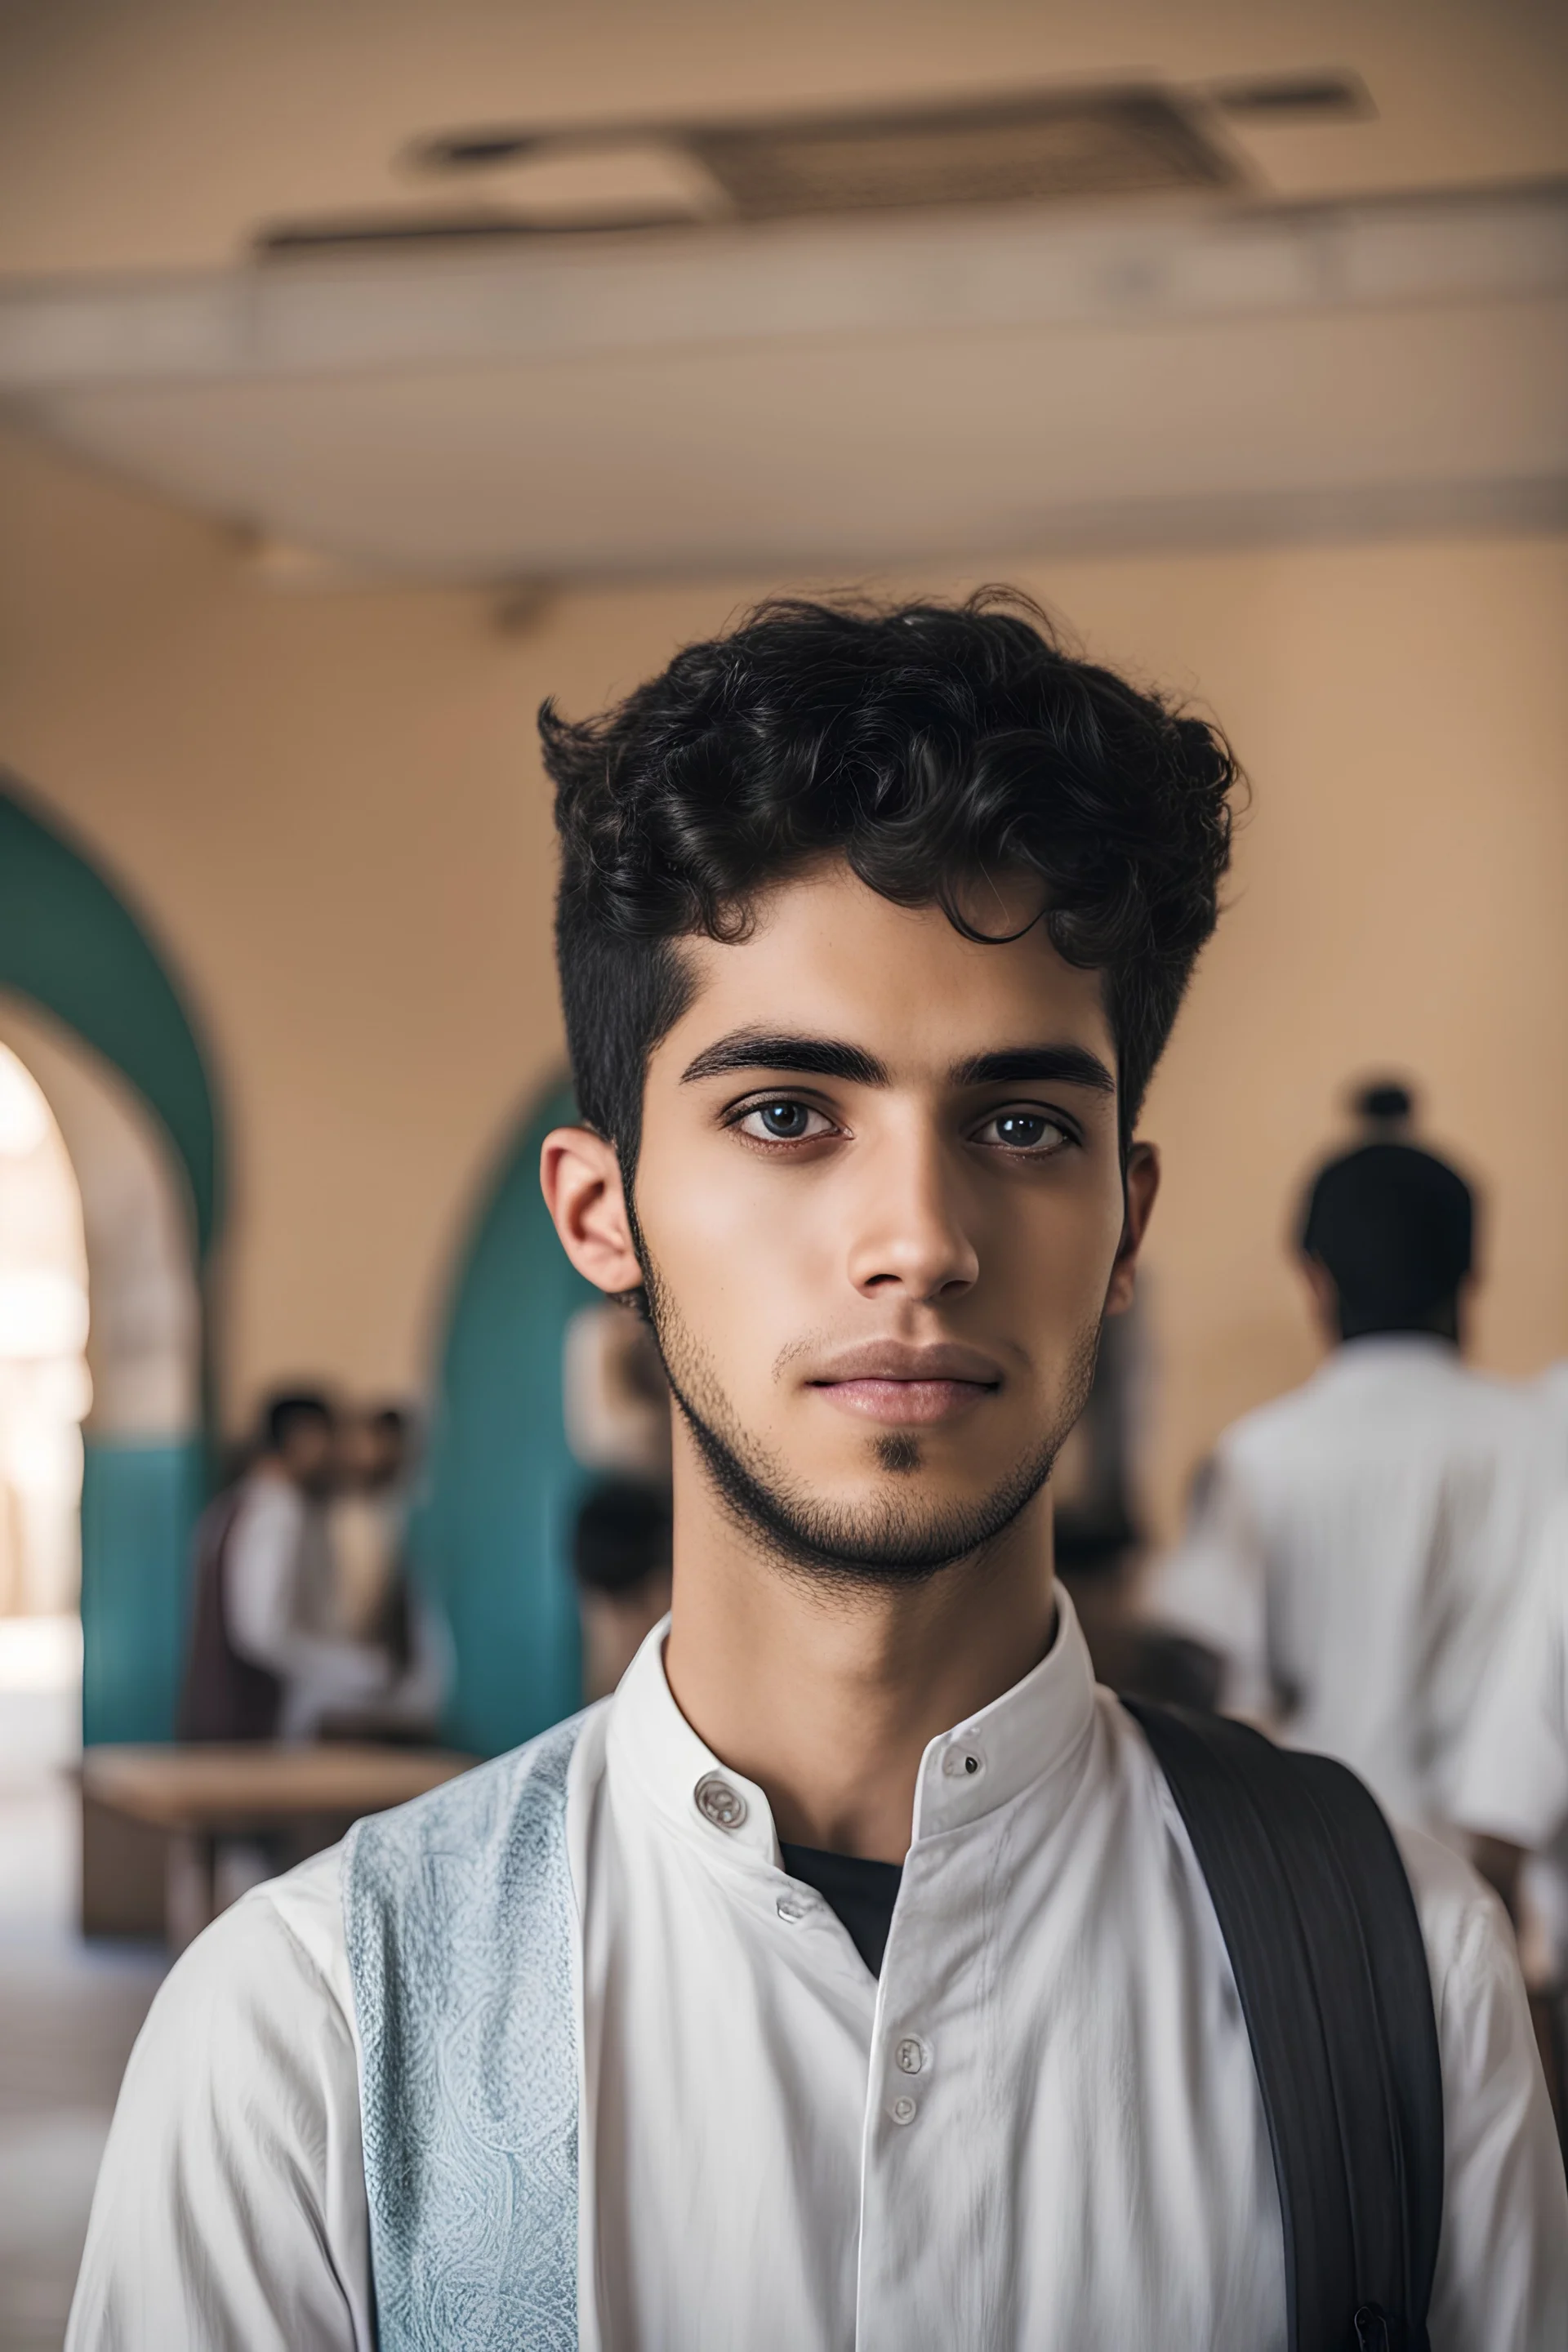 An Arabic young man inside a school